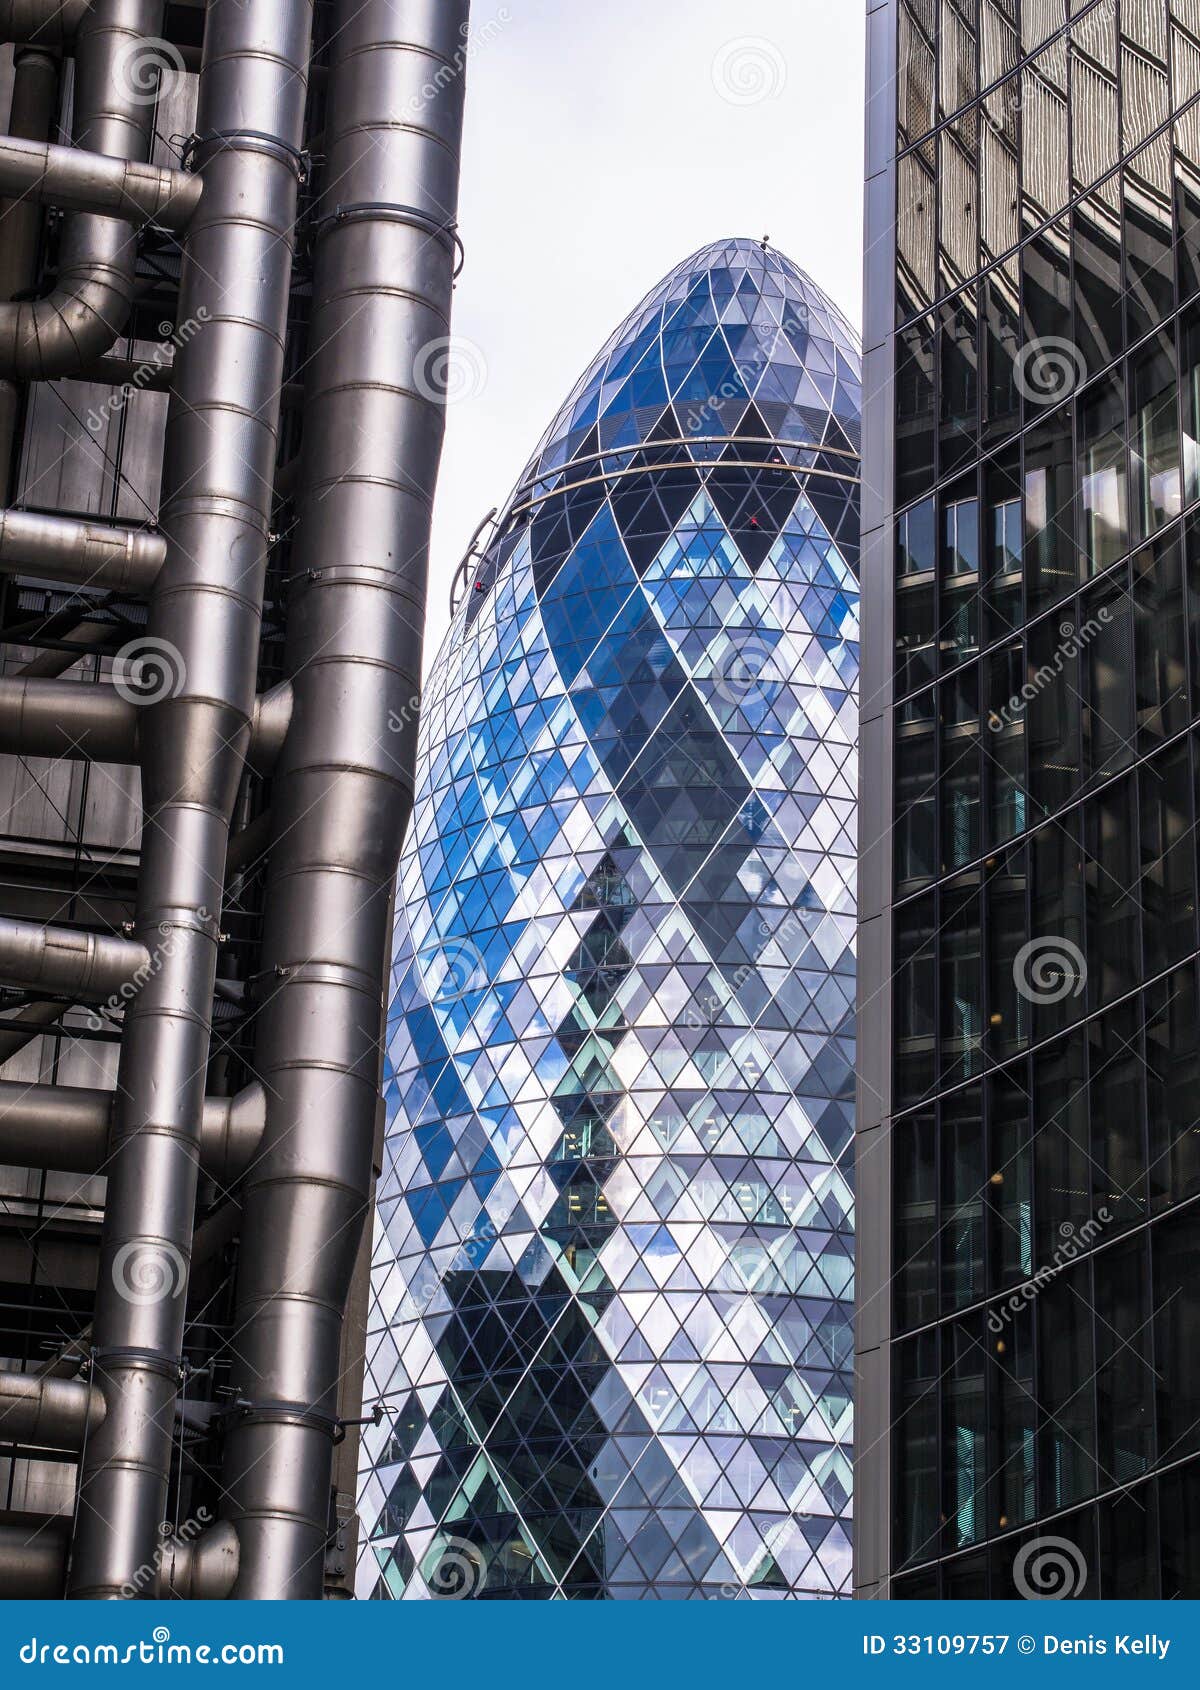 three london skyscrapers - gherkin, lloyds, willis